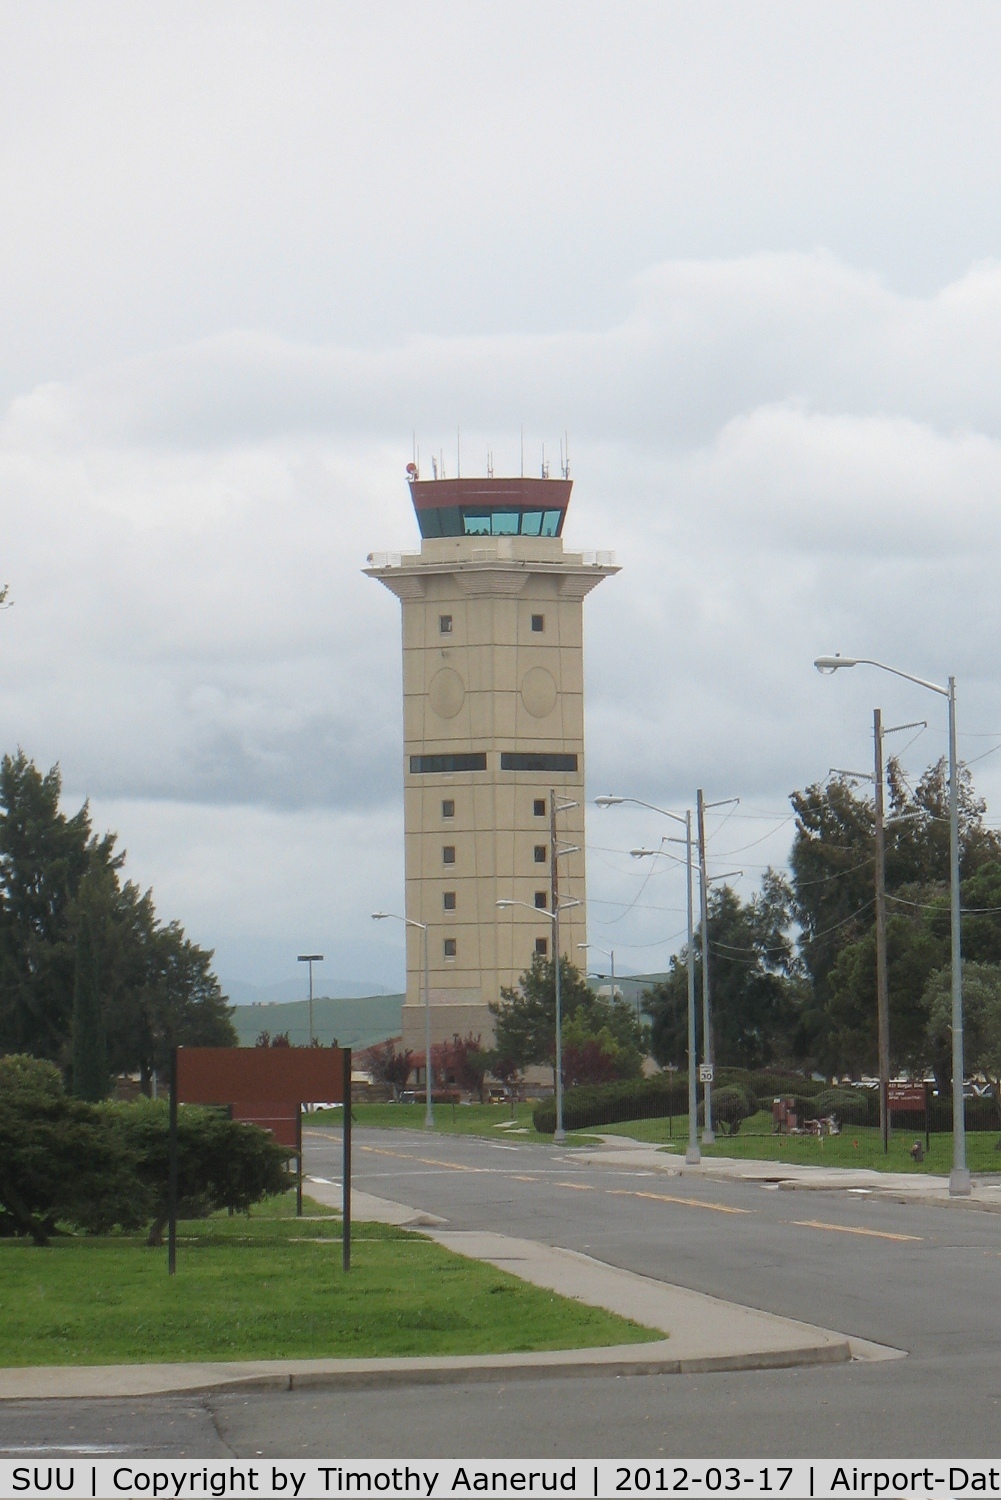 Travis Afb Airport (SUU) - Travis AFB control tower